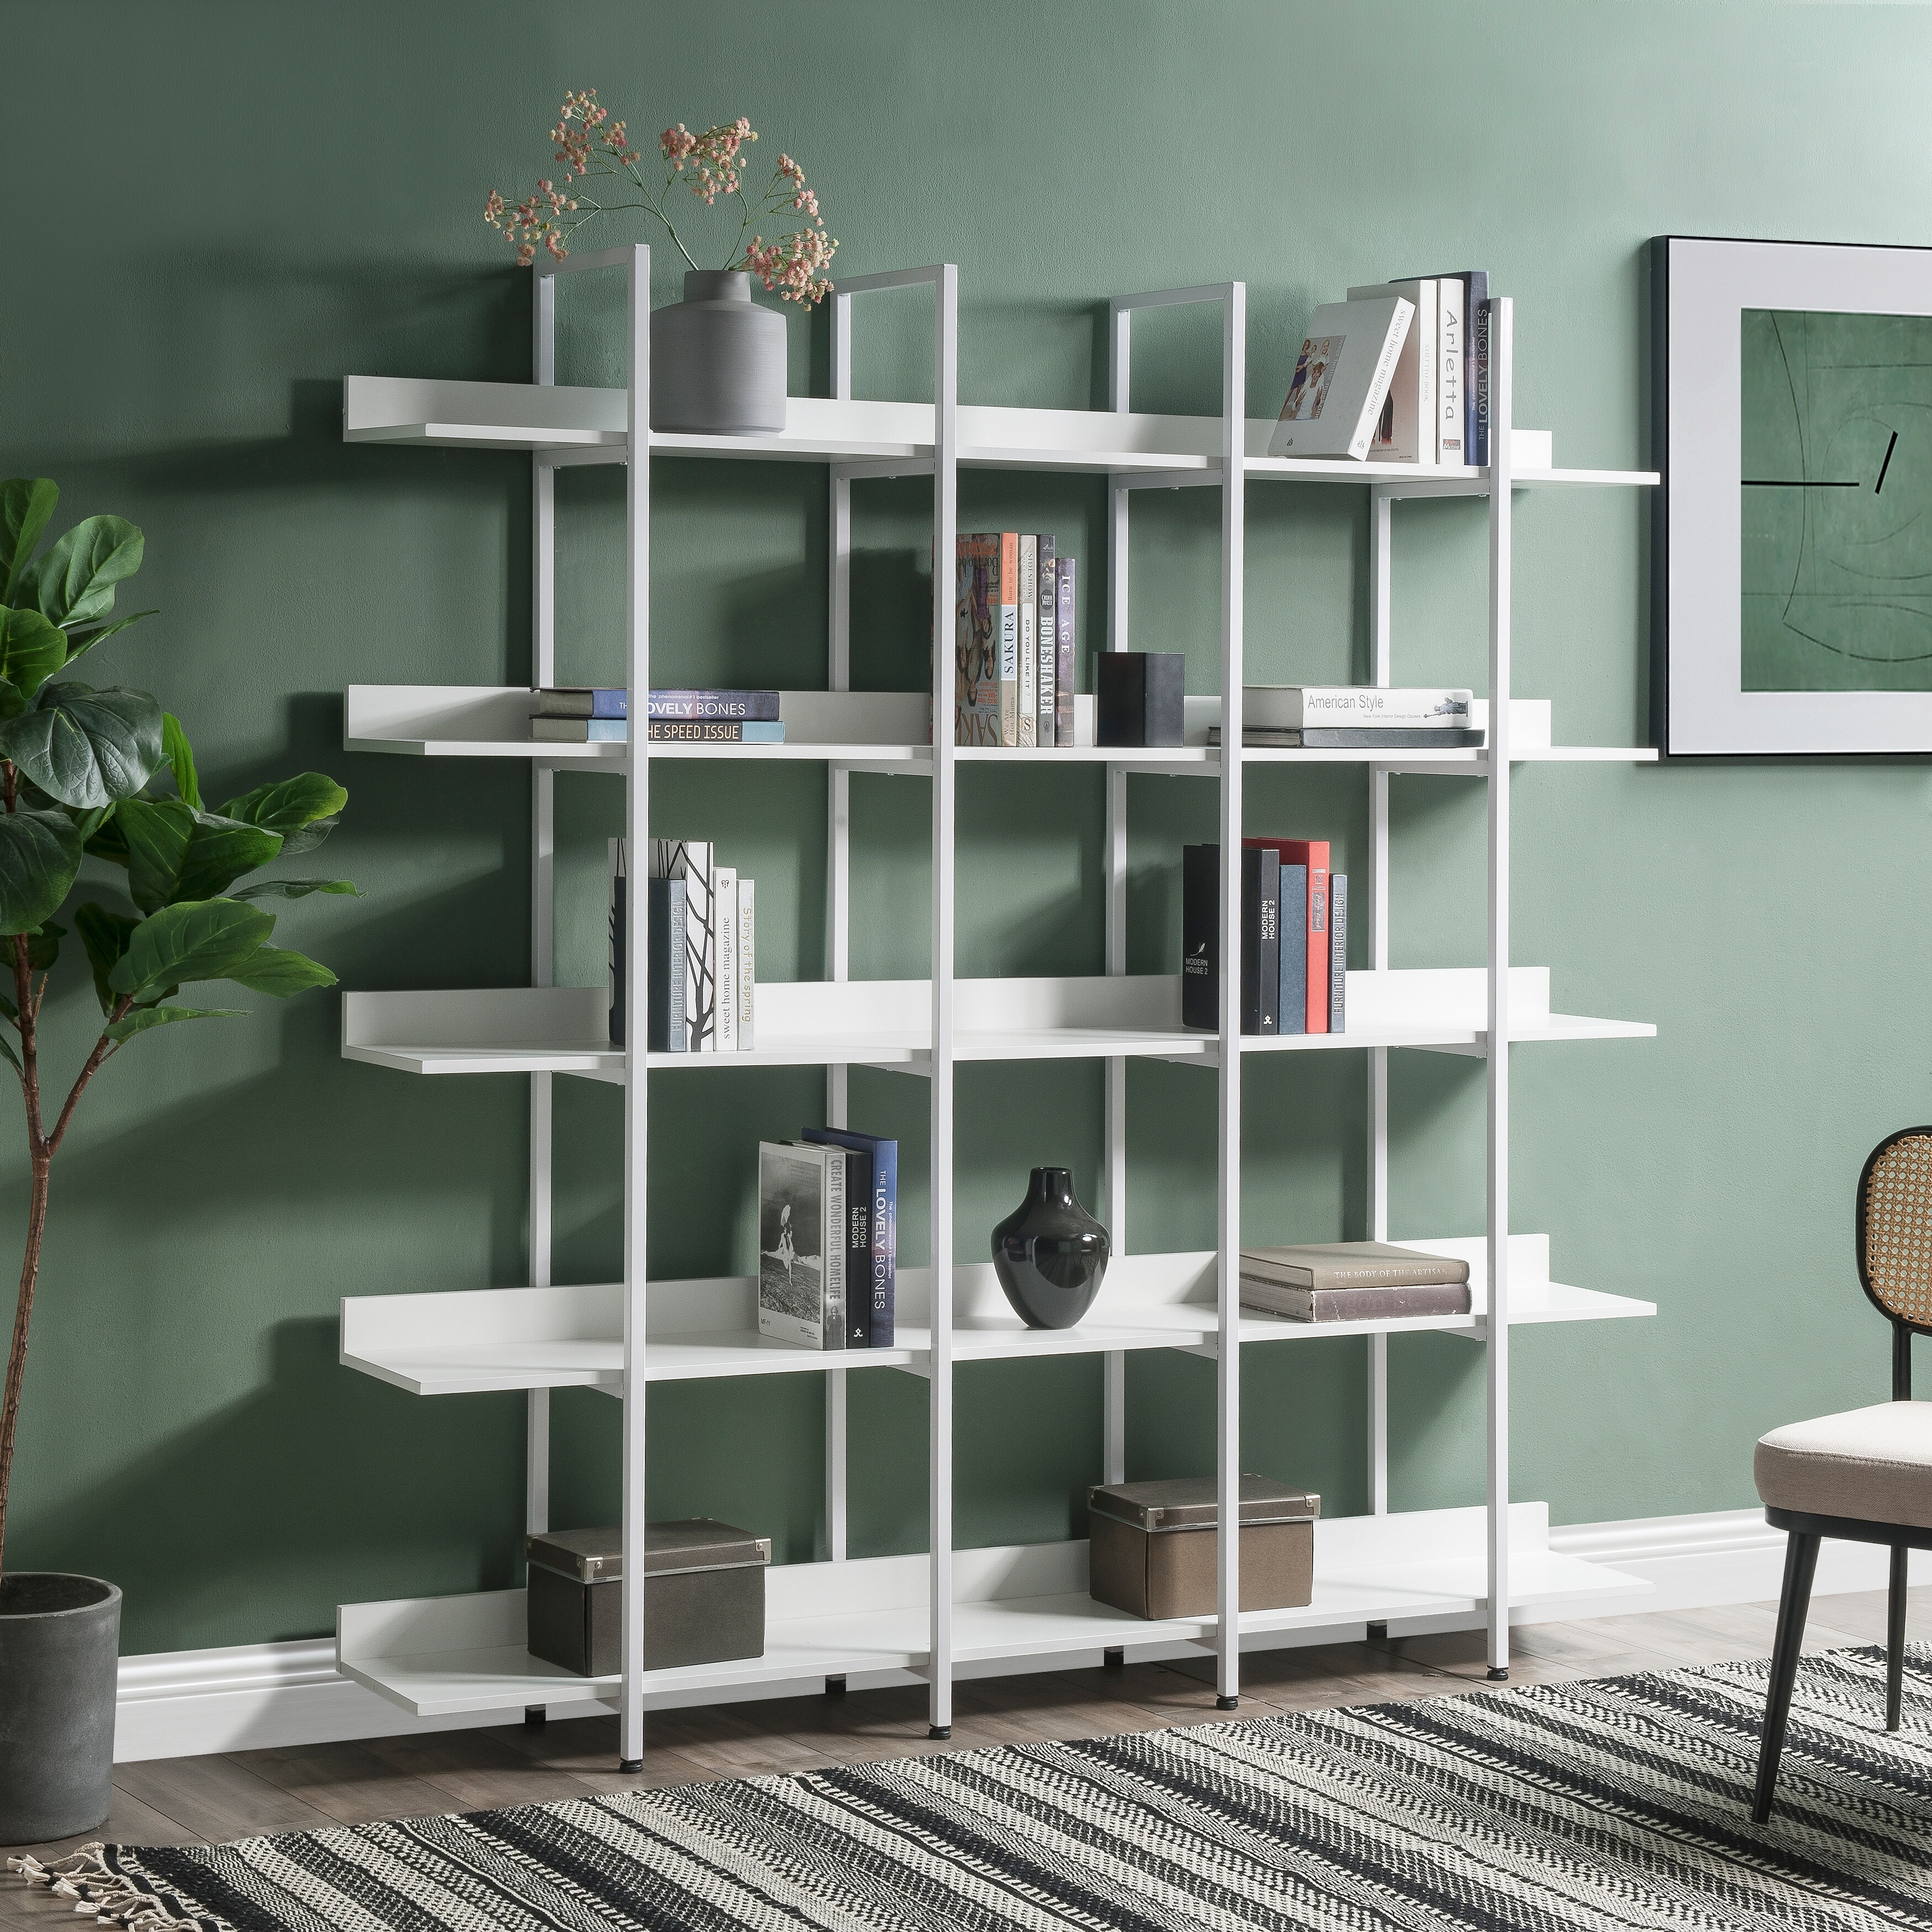 5 Tier Bookshelf Arched Bookcase Modern Standing Bookshelves Tall Display  Racks Metal Book Shelf for Bedroom, Living Room, Home Office